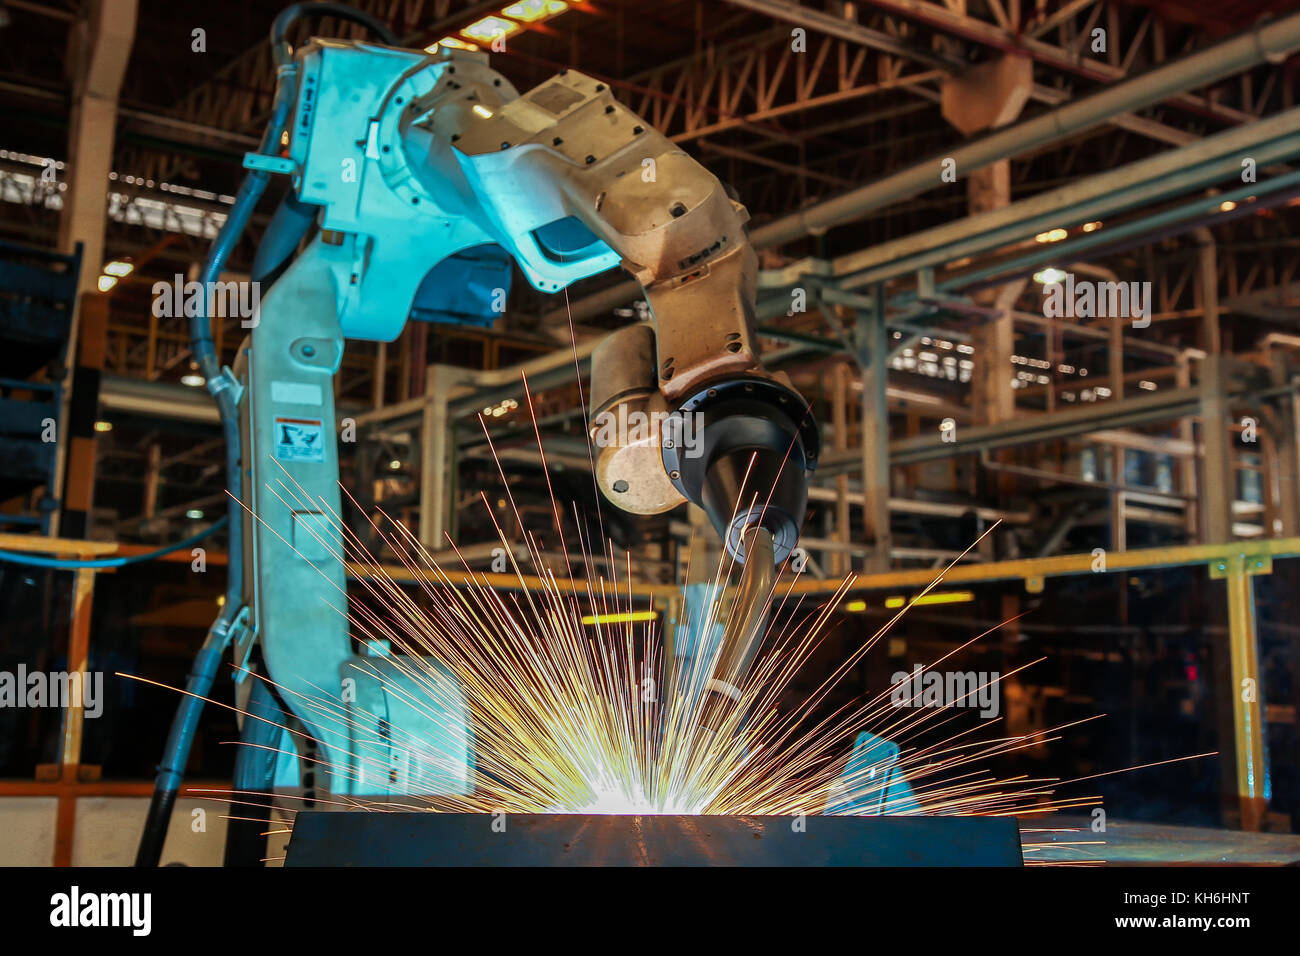 Team robots are welding automotive part. Stock Photo